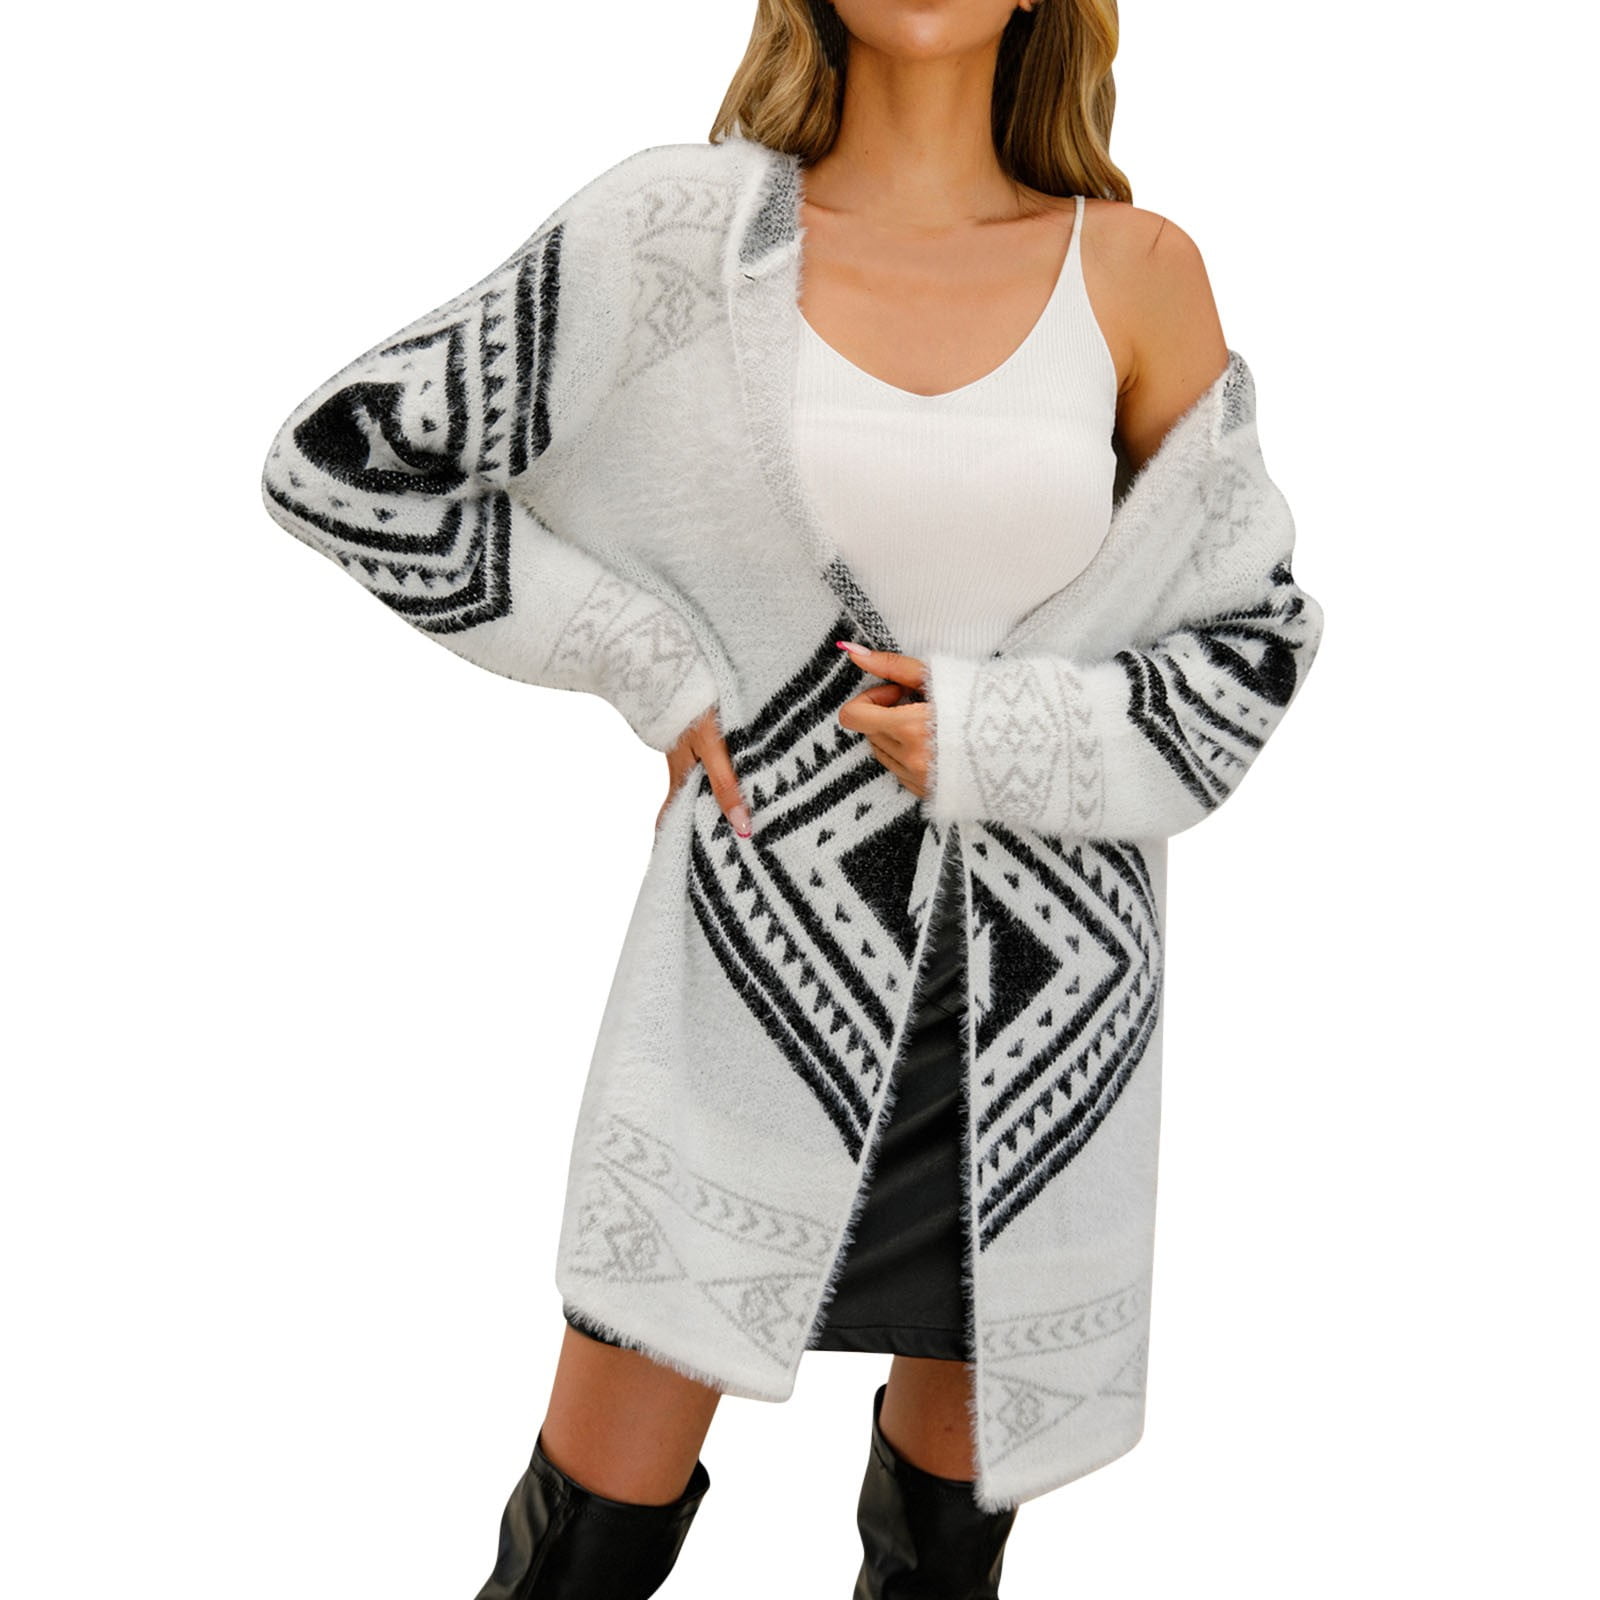 Larisalt Cardigan For Women,Women's Open Front Long Sleeve Boho Boyfriend  Knit Chunky Cardigan Sweater White,XL - Walmart.com